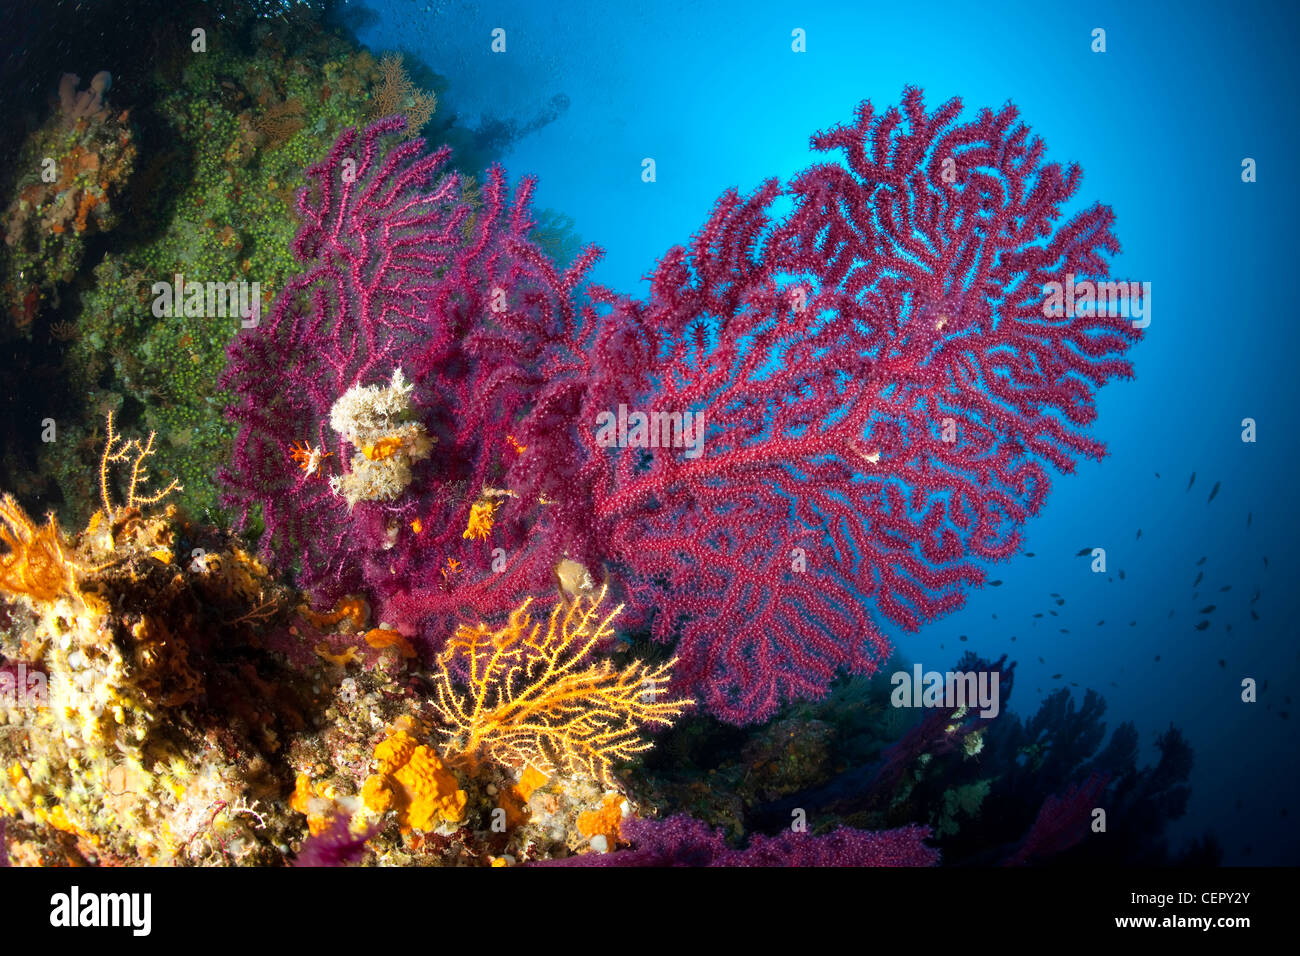 Variable Gorgonian in Coral Reef, Paramuricea clavata, Vis Island, Adriatic Sea, Croatia Stock Photo